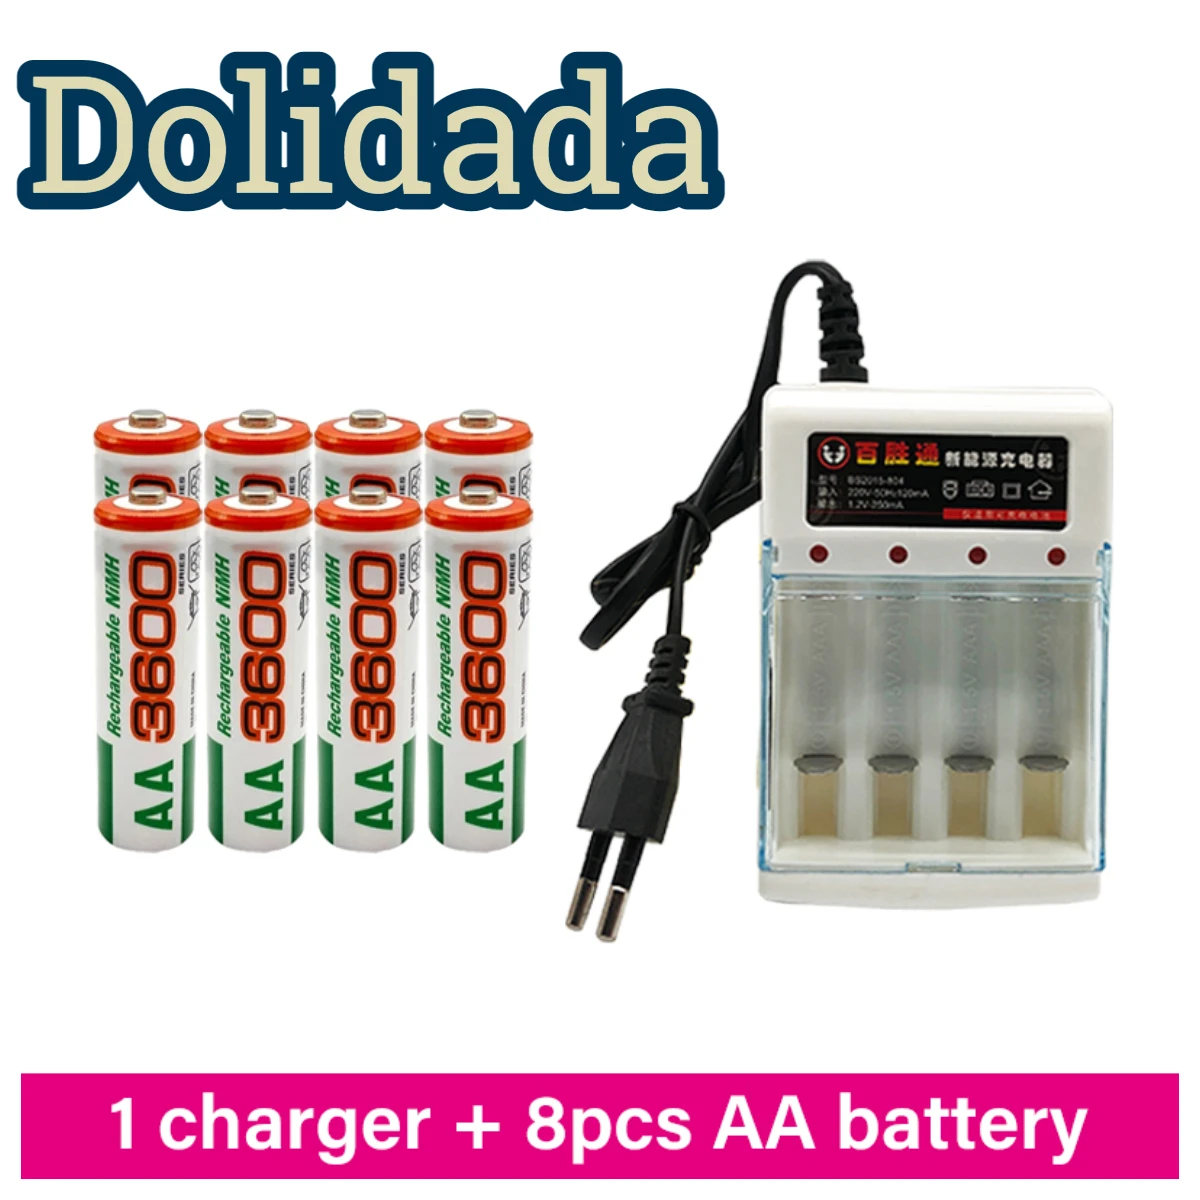 

Dolidada 2023 Aa rechargeable battery 3600Mah aa1.2v Ni MH rechargeable battery, applicable of LED lamp toys Mp3